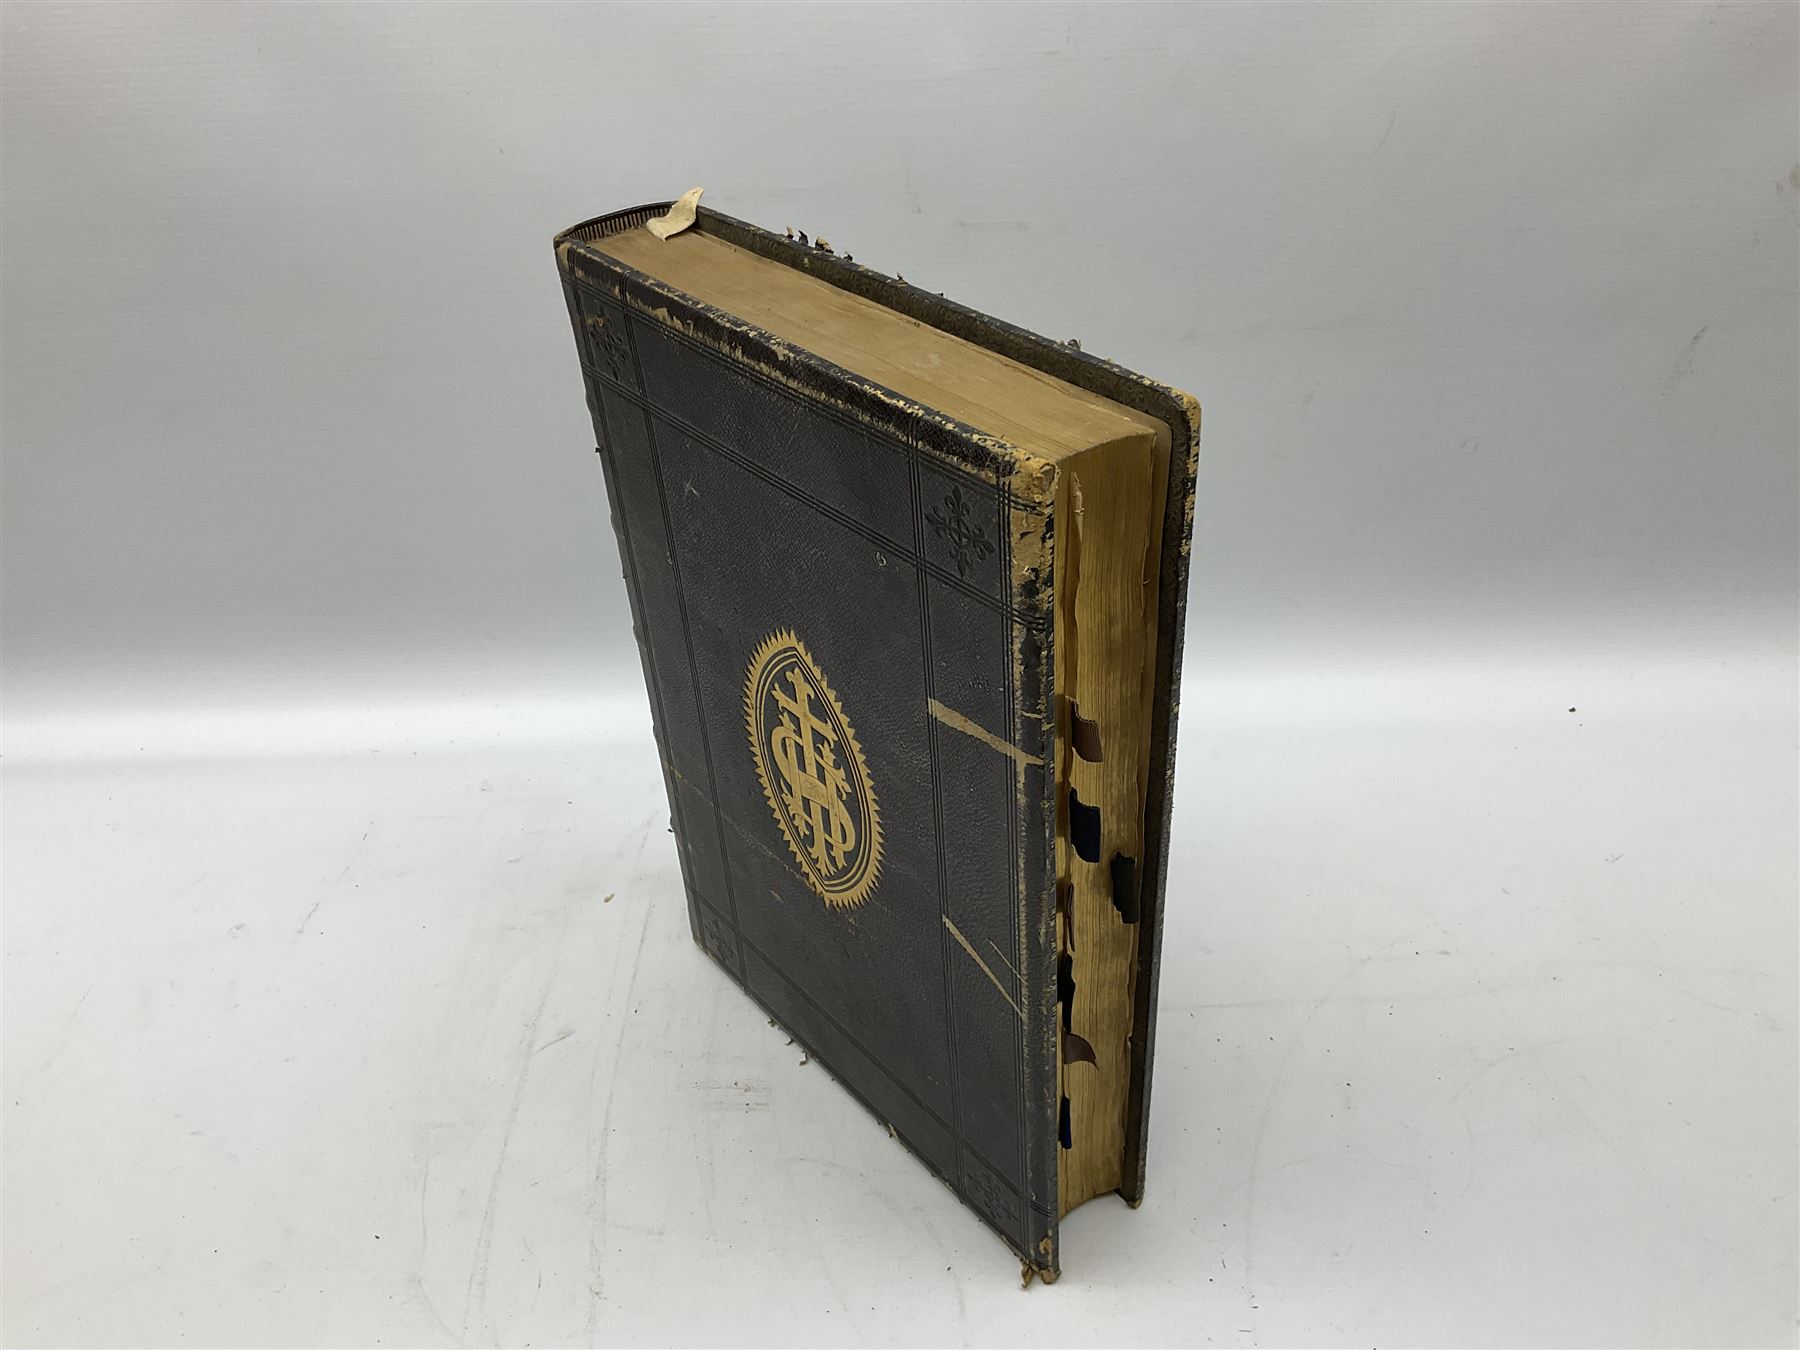 Six 19th century leather bound books of music comprising Graduale Juxta Missale Romanum and Antiphon - Image 12 of 21